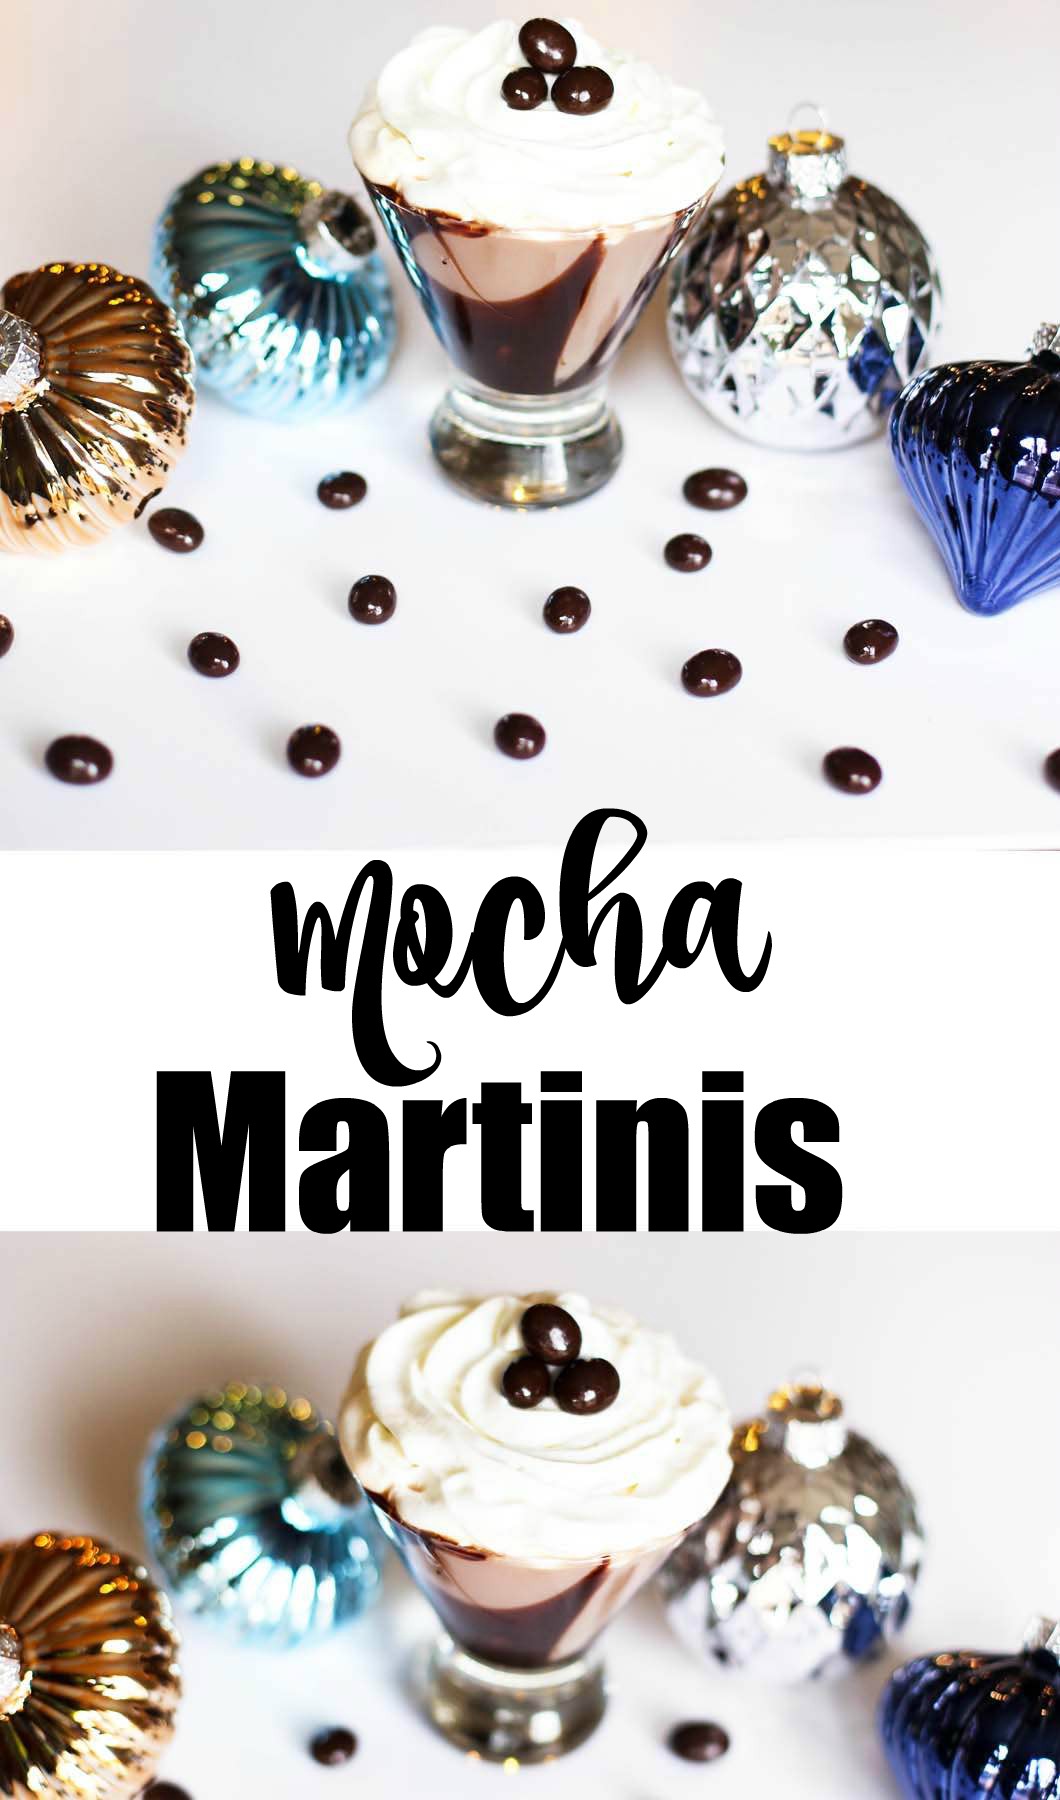 Mocha Martinis